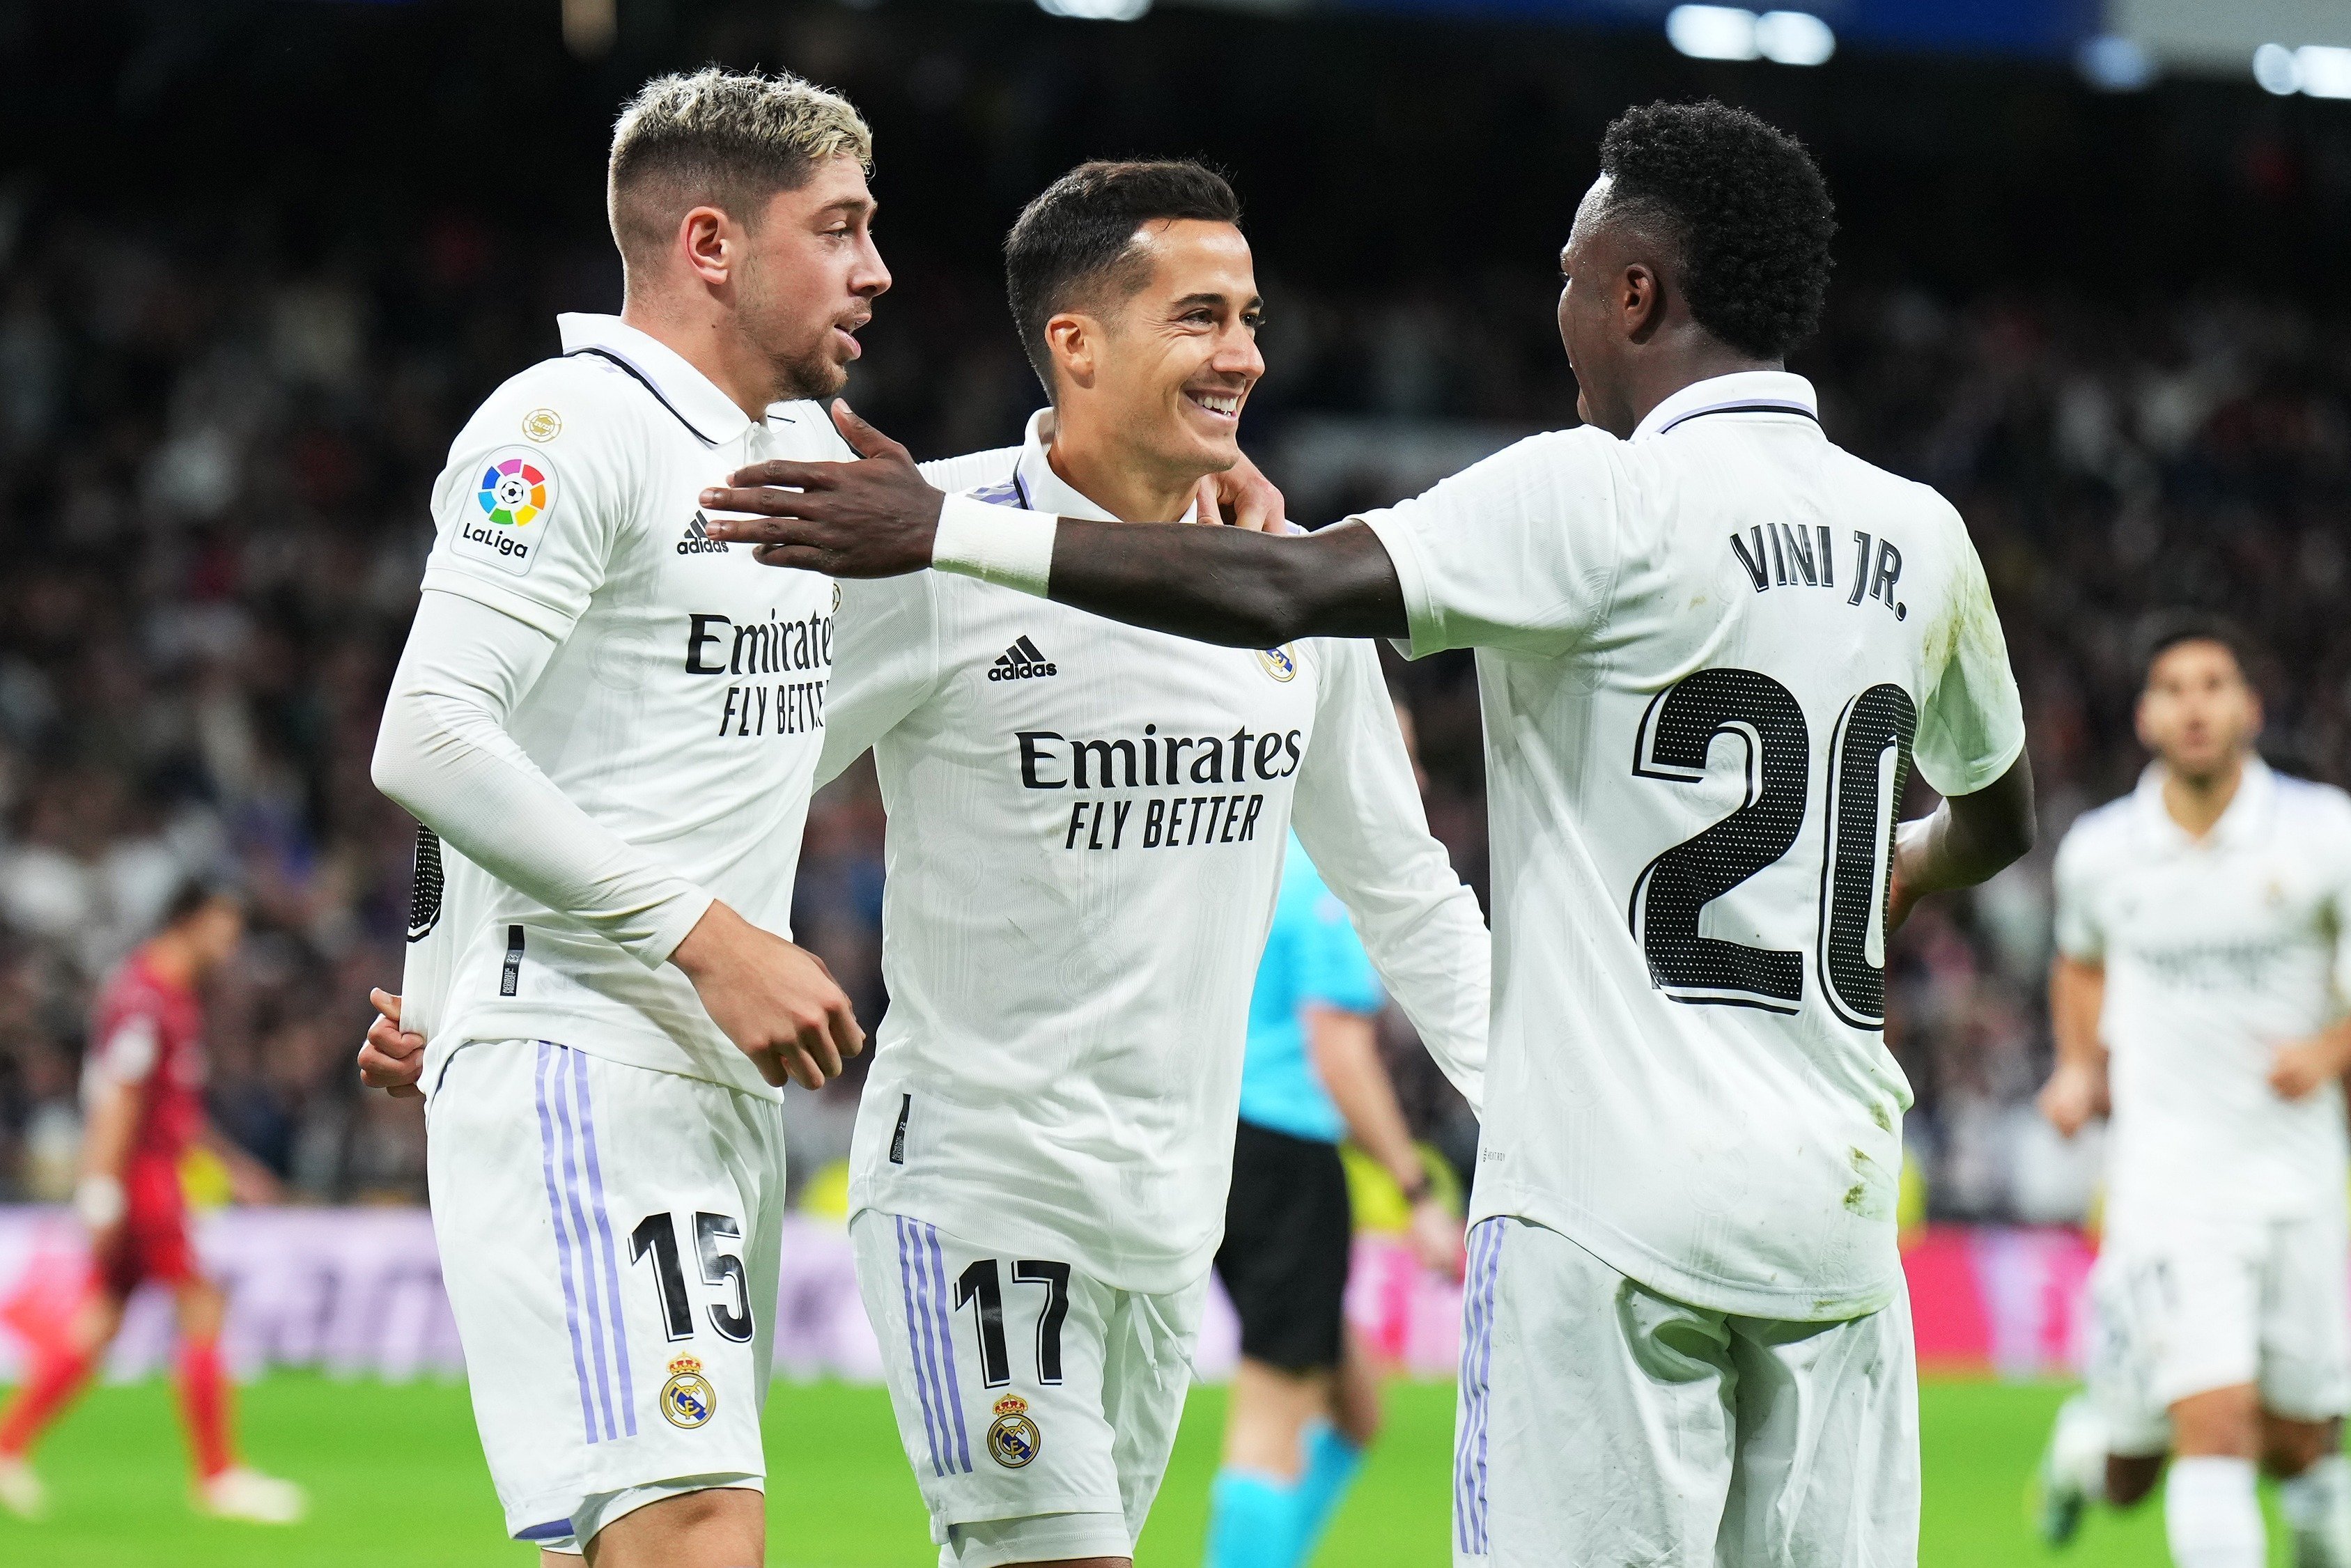 Real Madrid unbeaten in 20 games Get Spanish Football News